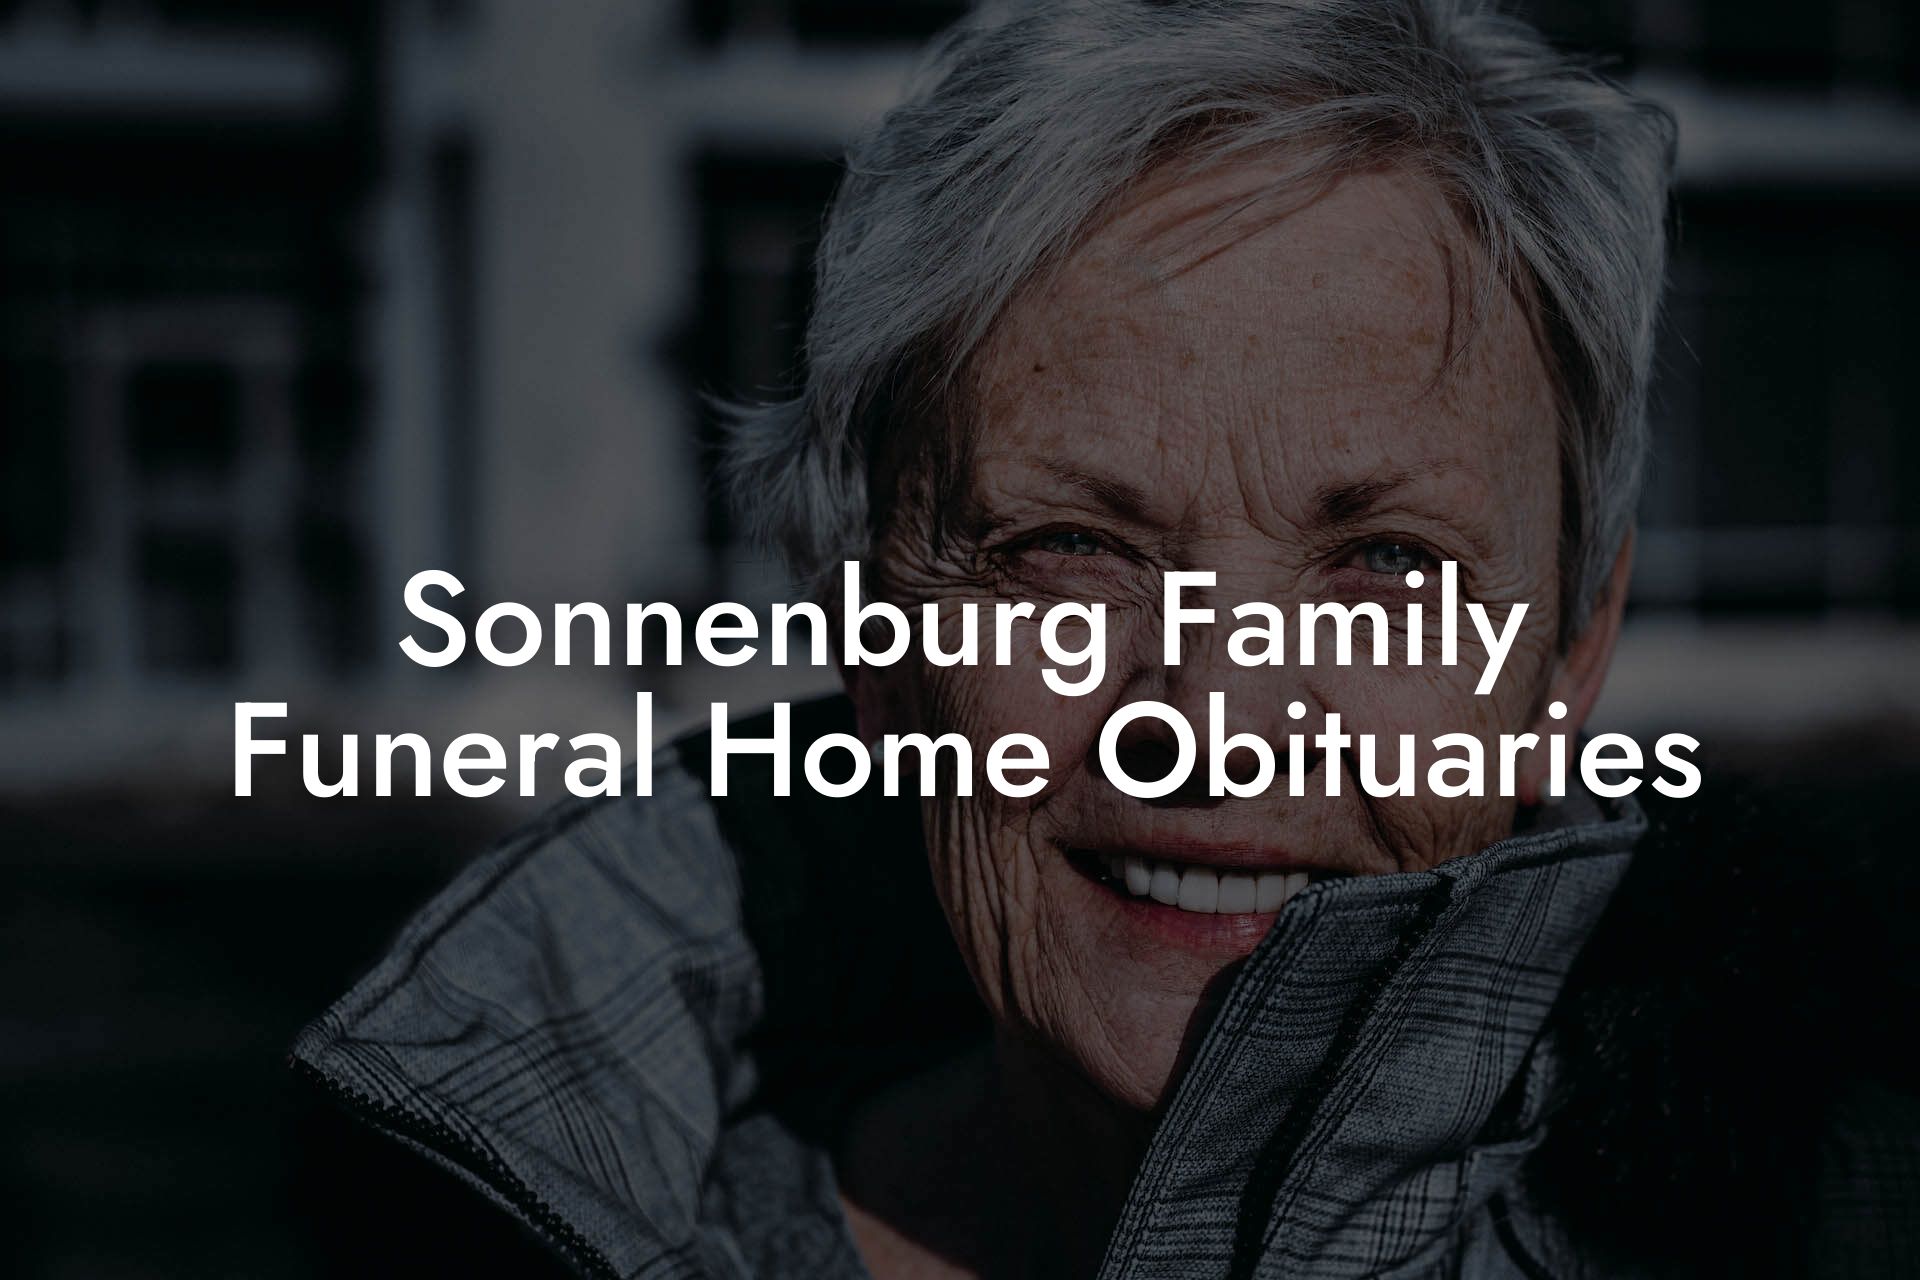 Sonnenburg Family Funeral Home Obituaries